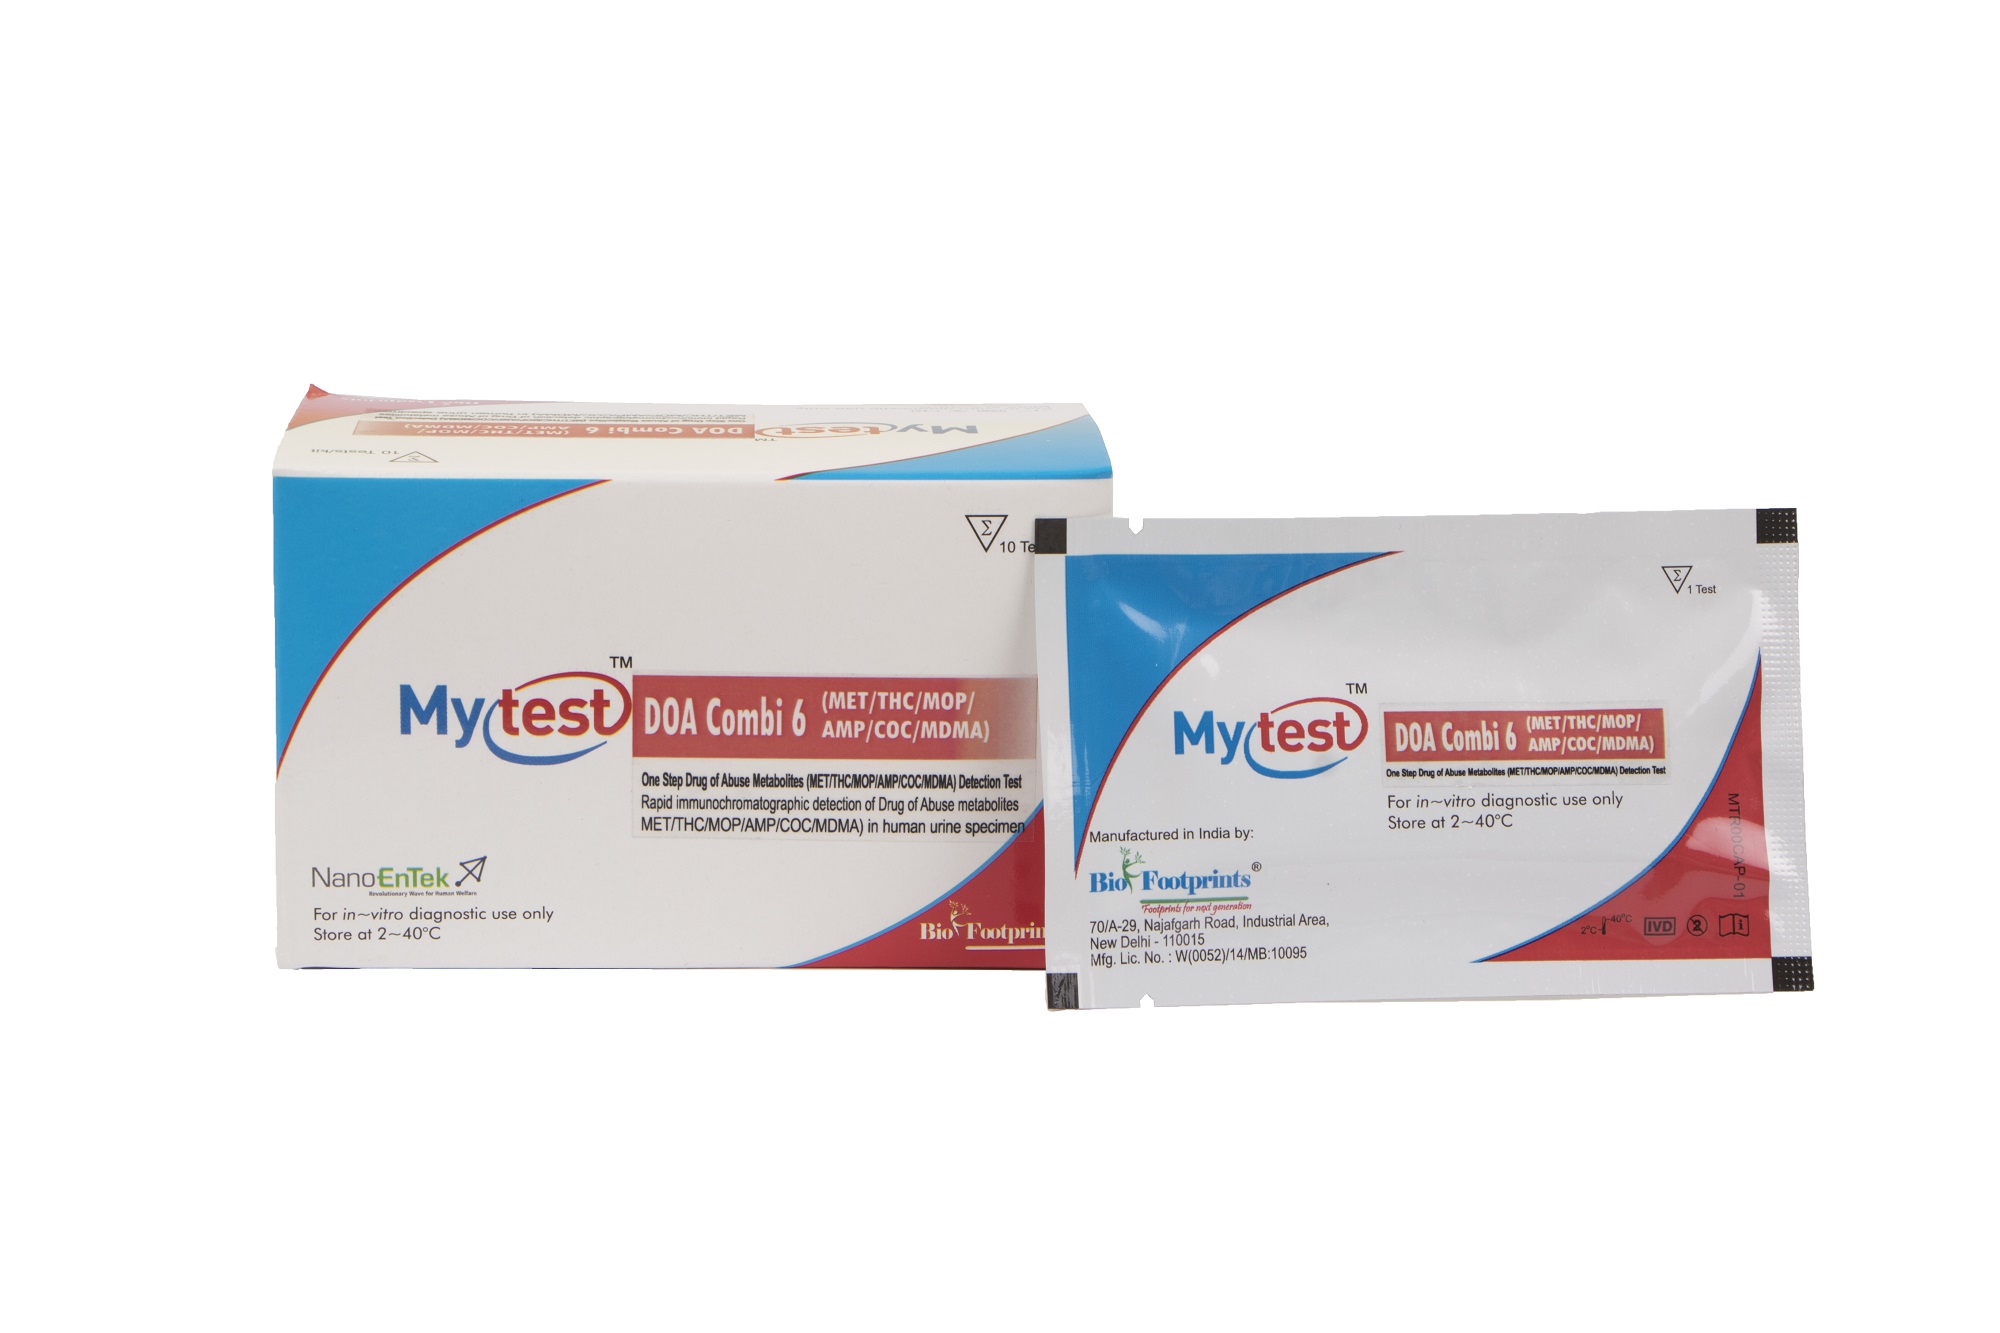 Mytest DOA Combi 6 (MET/THC/MOP/AMP/COC/MDMA
